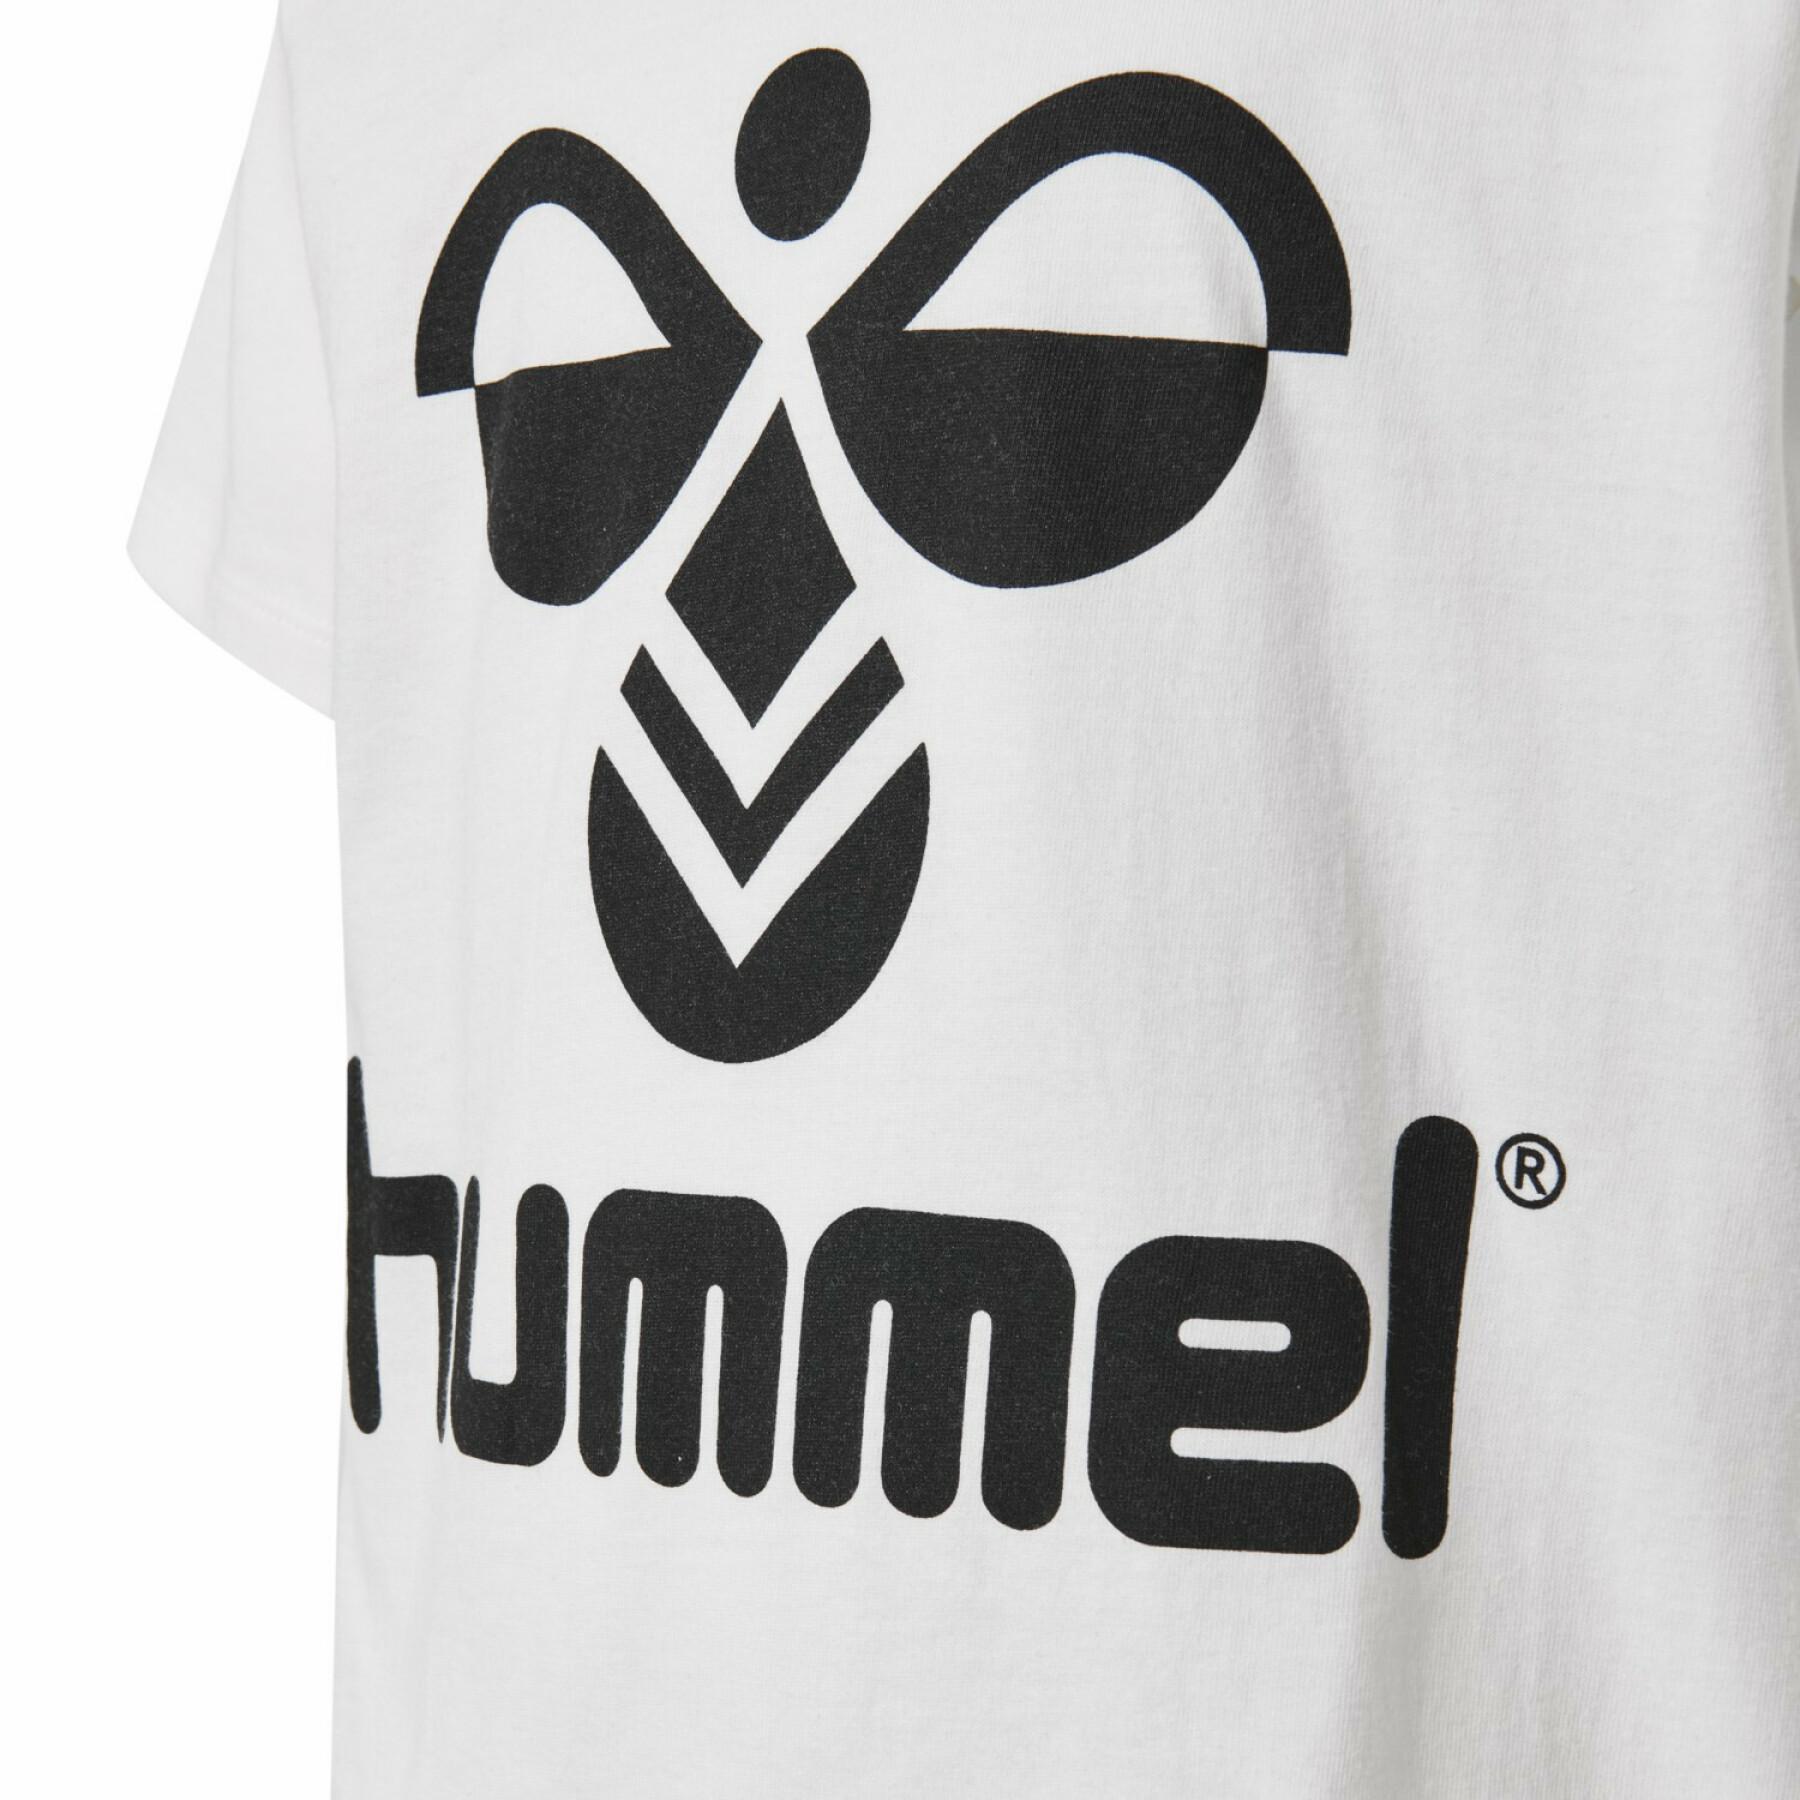 shirts wear wear et Kid\'s - T-shirts Hummel - hmltres - T-shirt Women\'s polo volleyball Volleyball